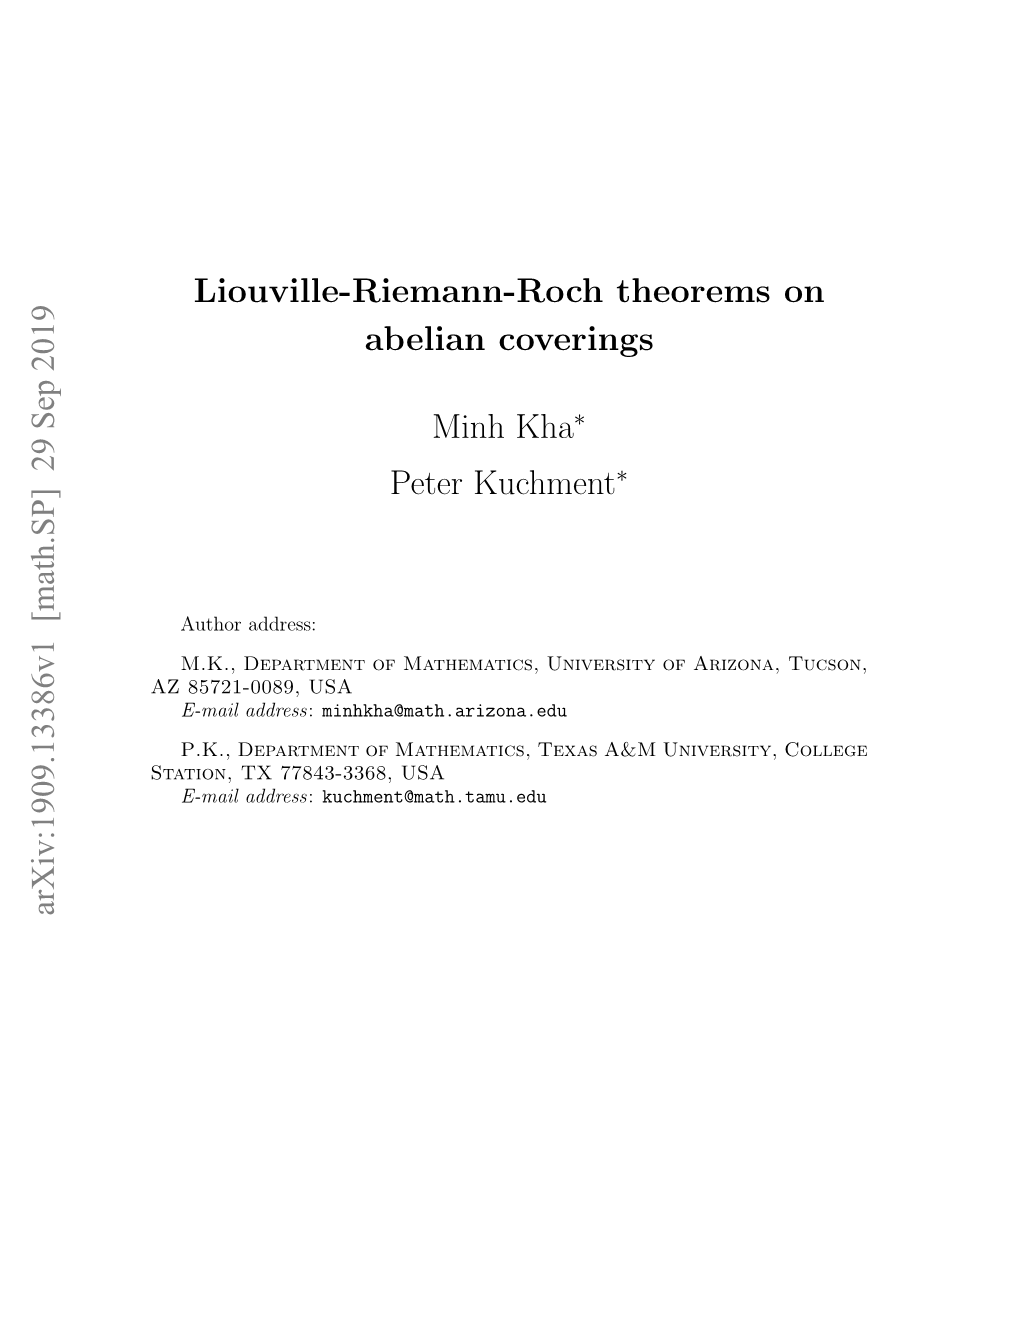 Liouville-Riemann-Roch Theorems on Abelian Coverings Minh Kha